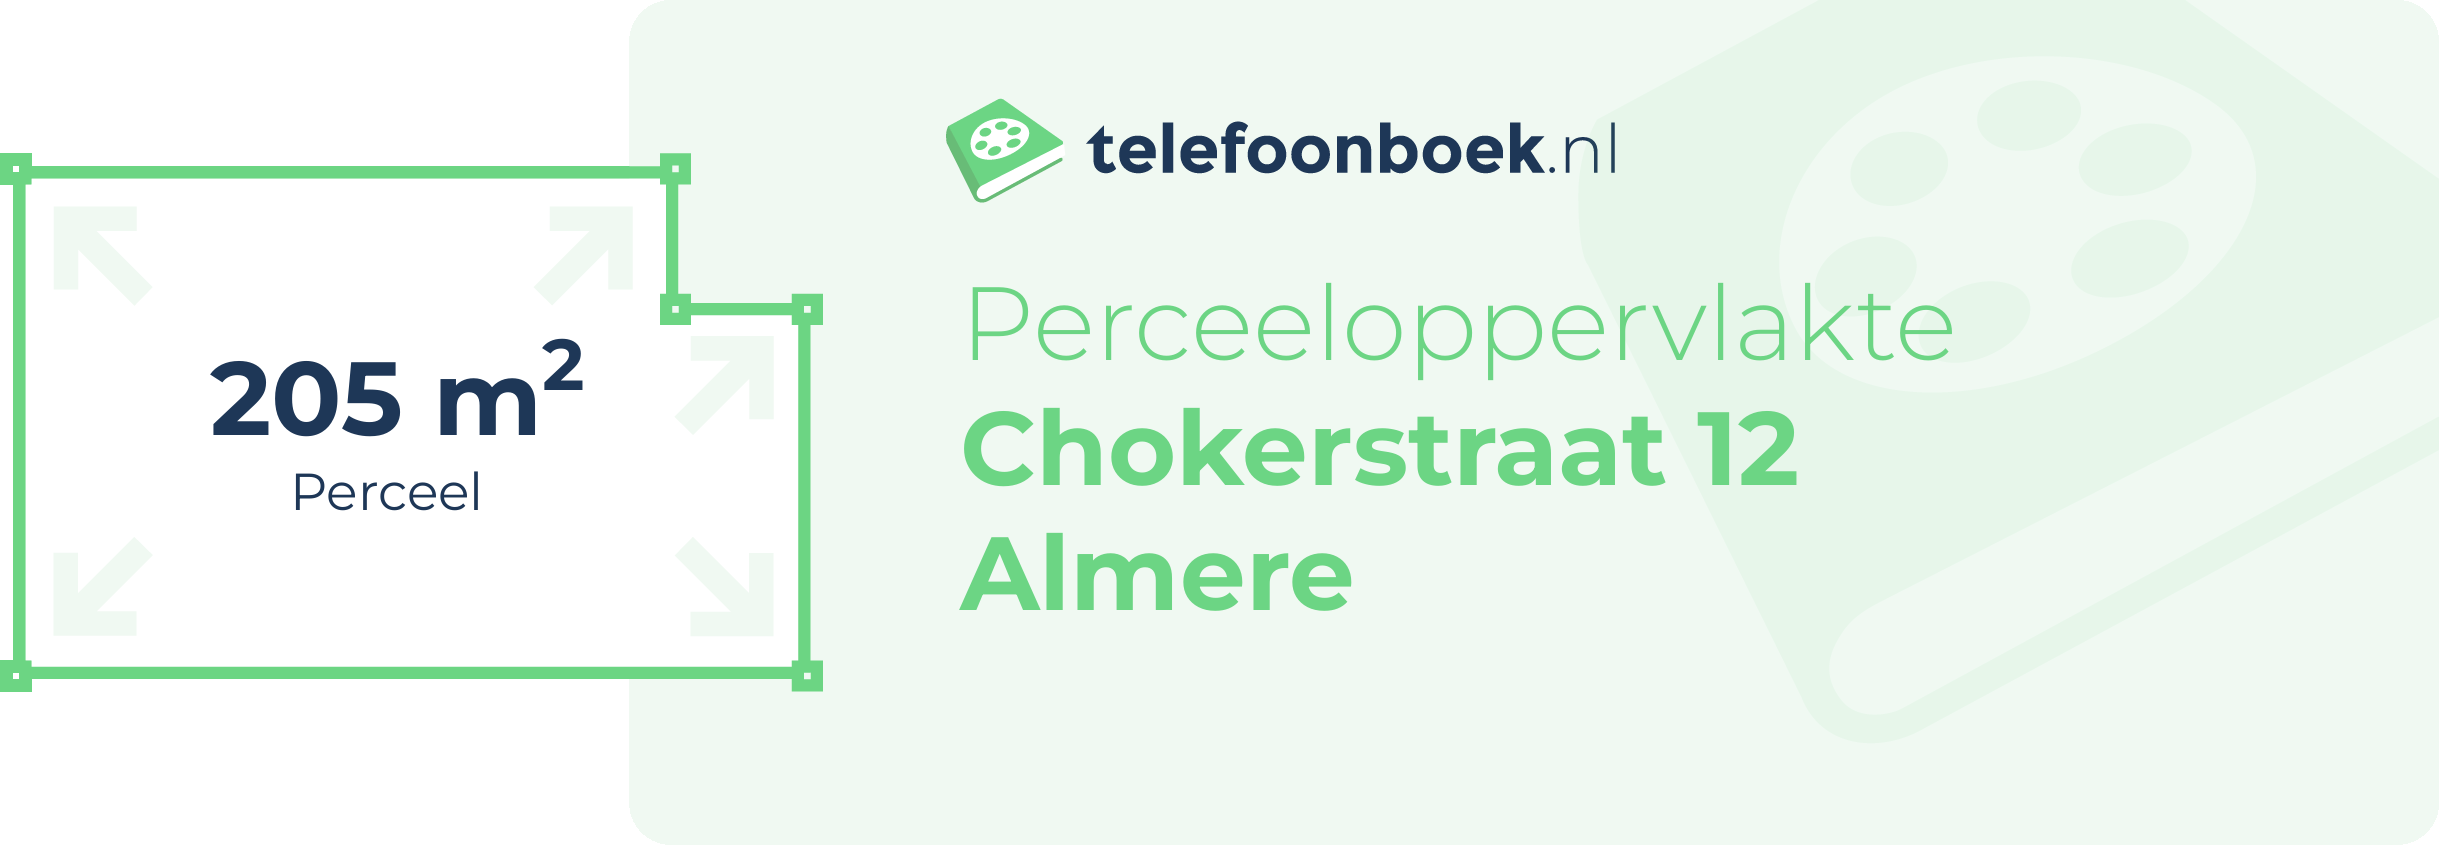 Perceeloppervlakte Chokerstraat 12 Almere